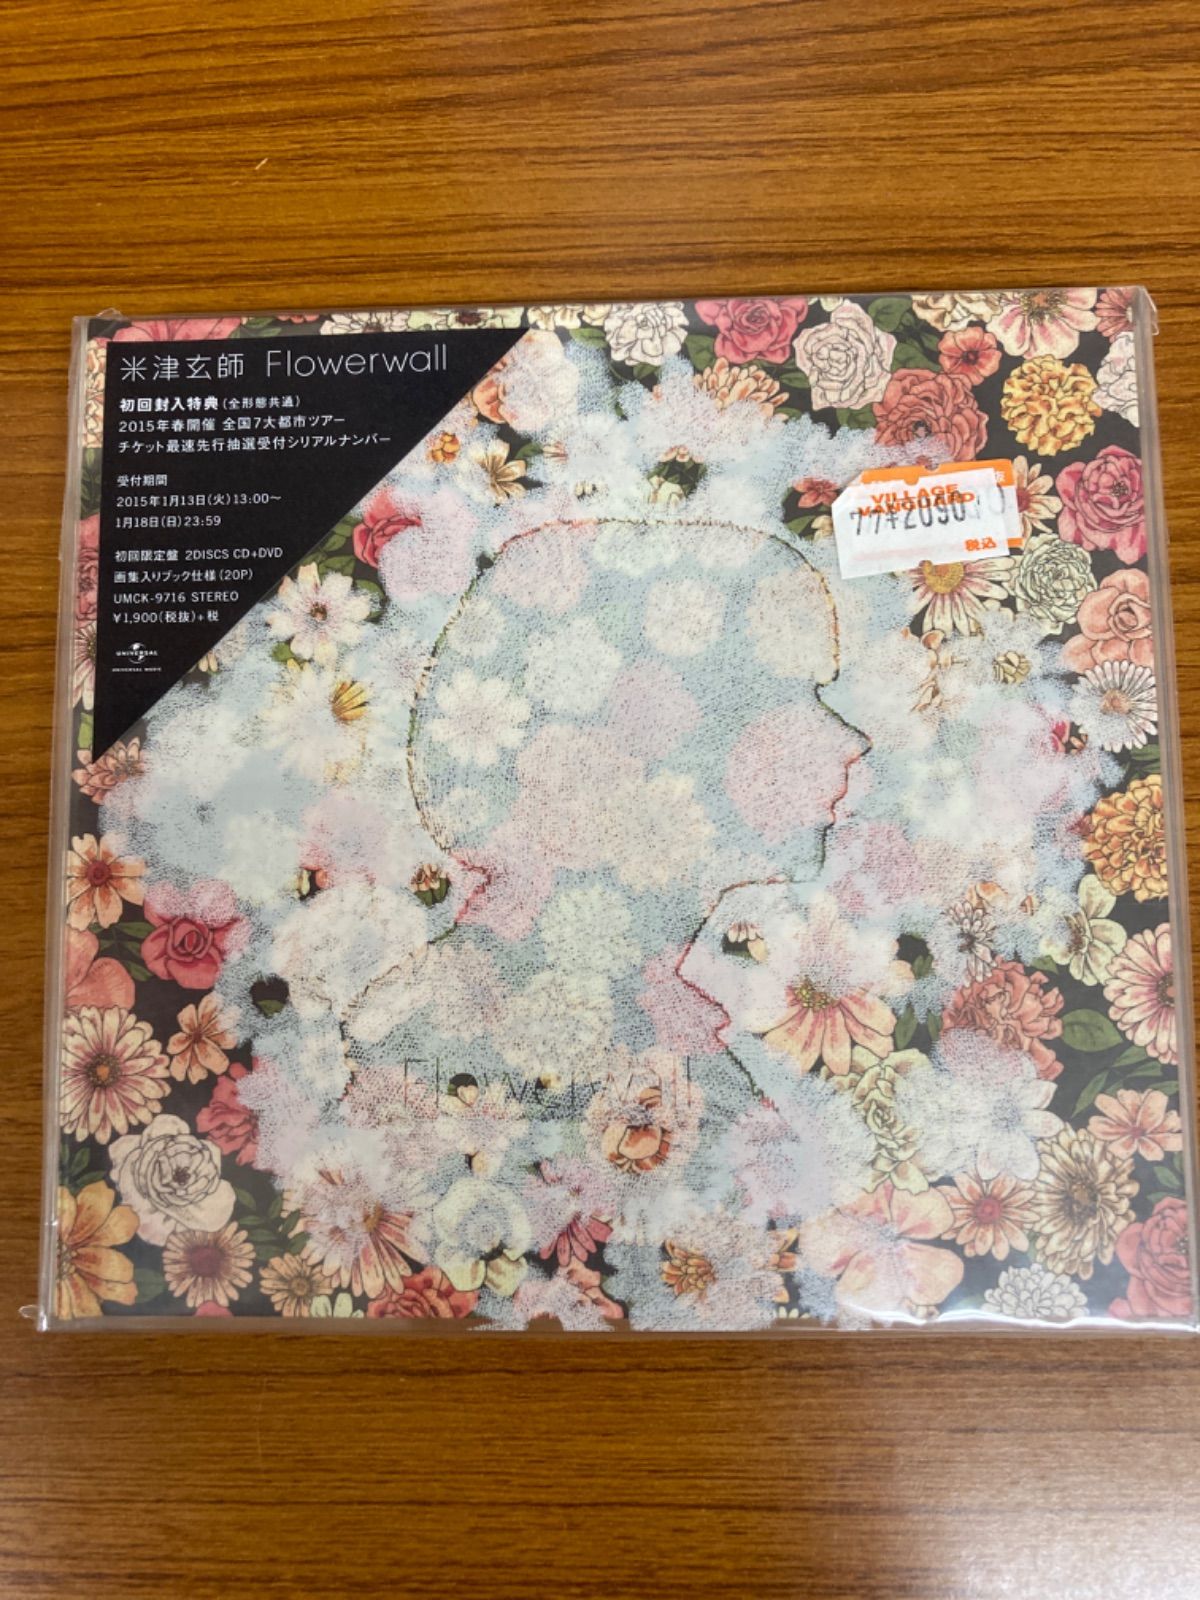 Flowerwall (初回限定盤)(DVD+画集付) 米津玄師 - メルカリ